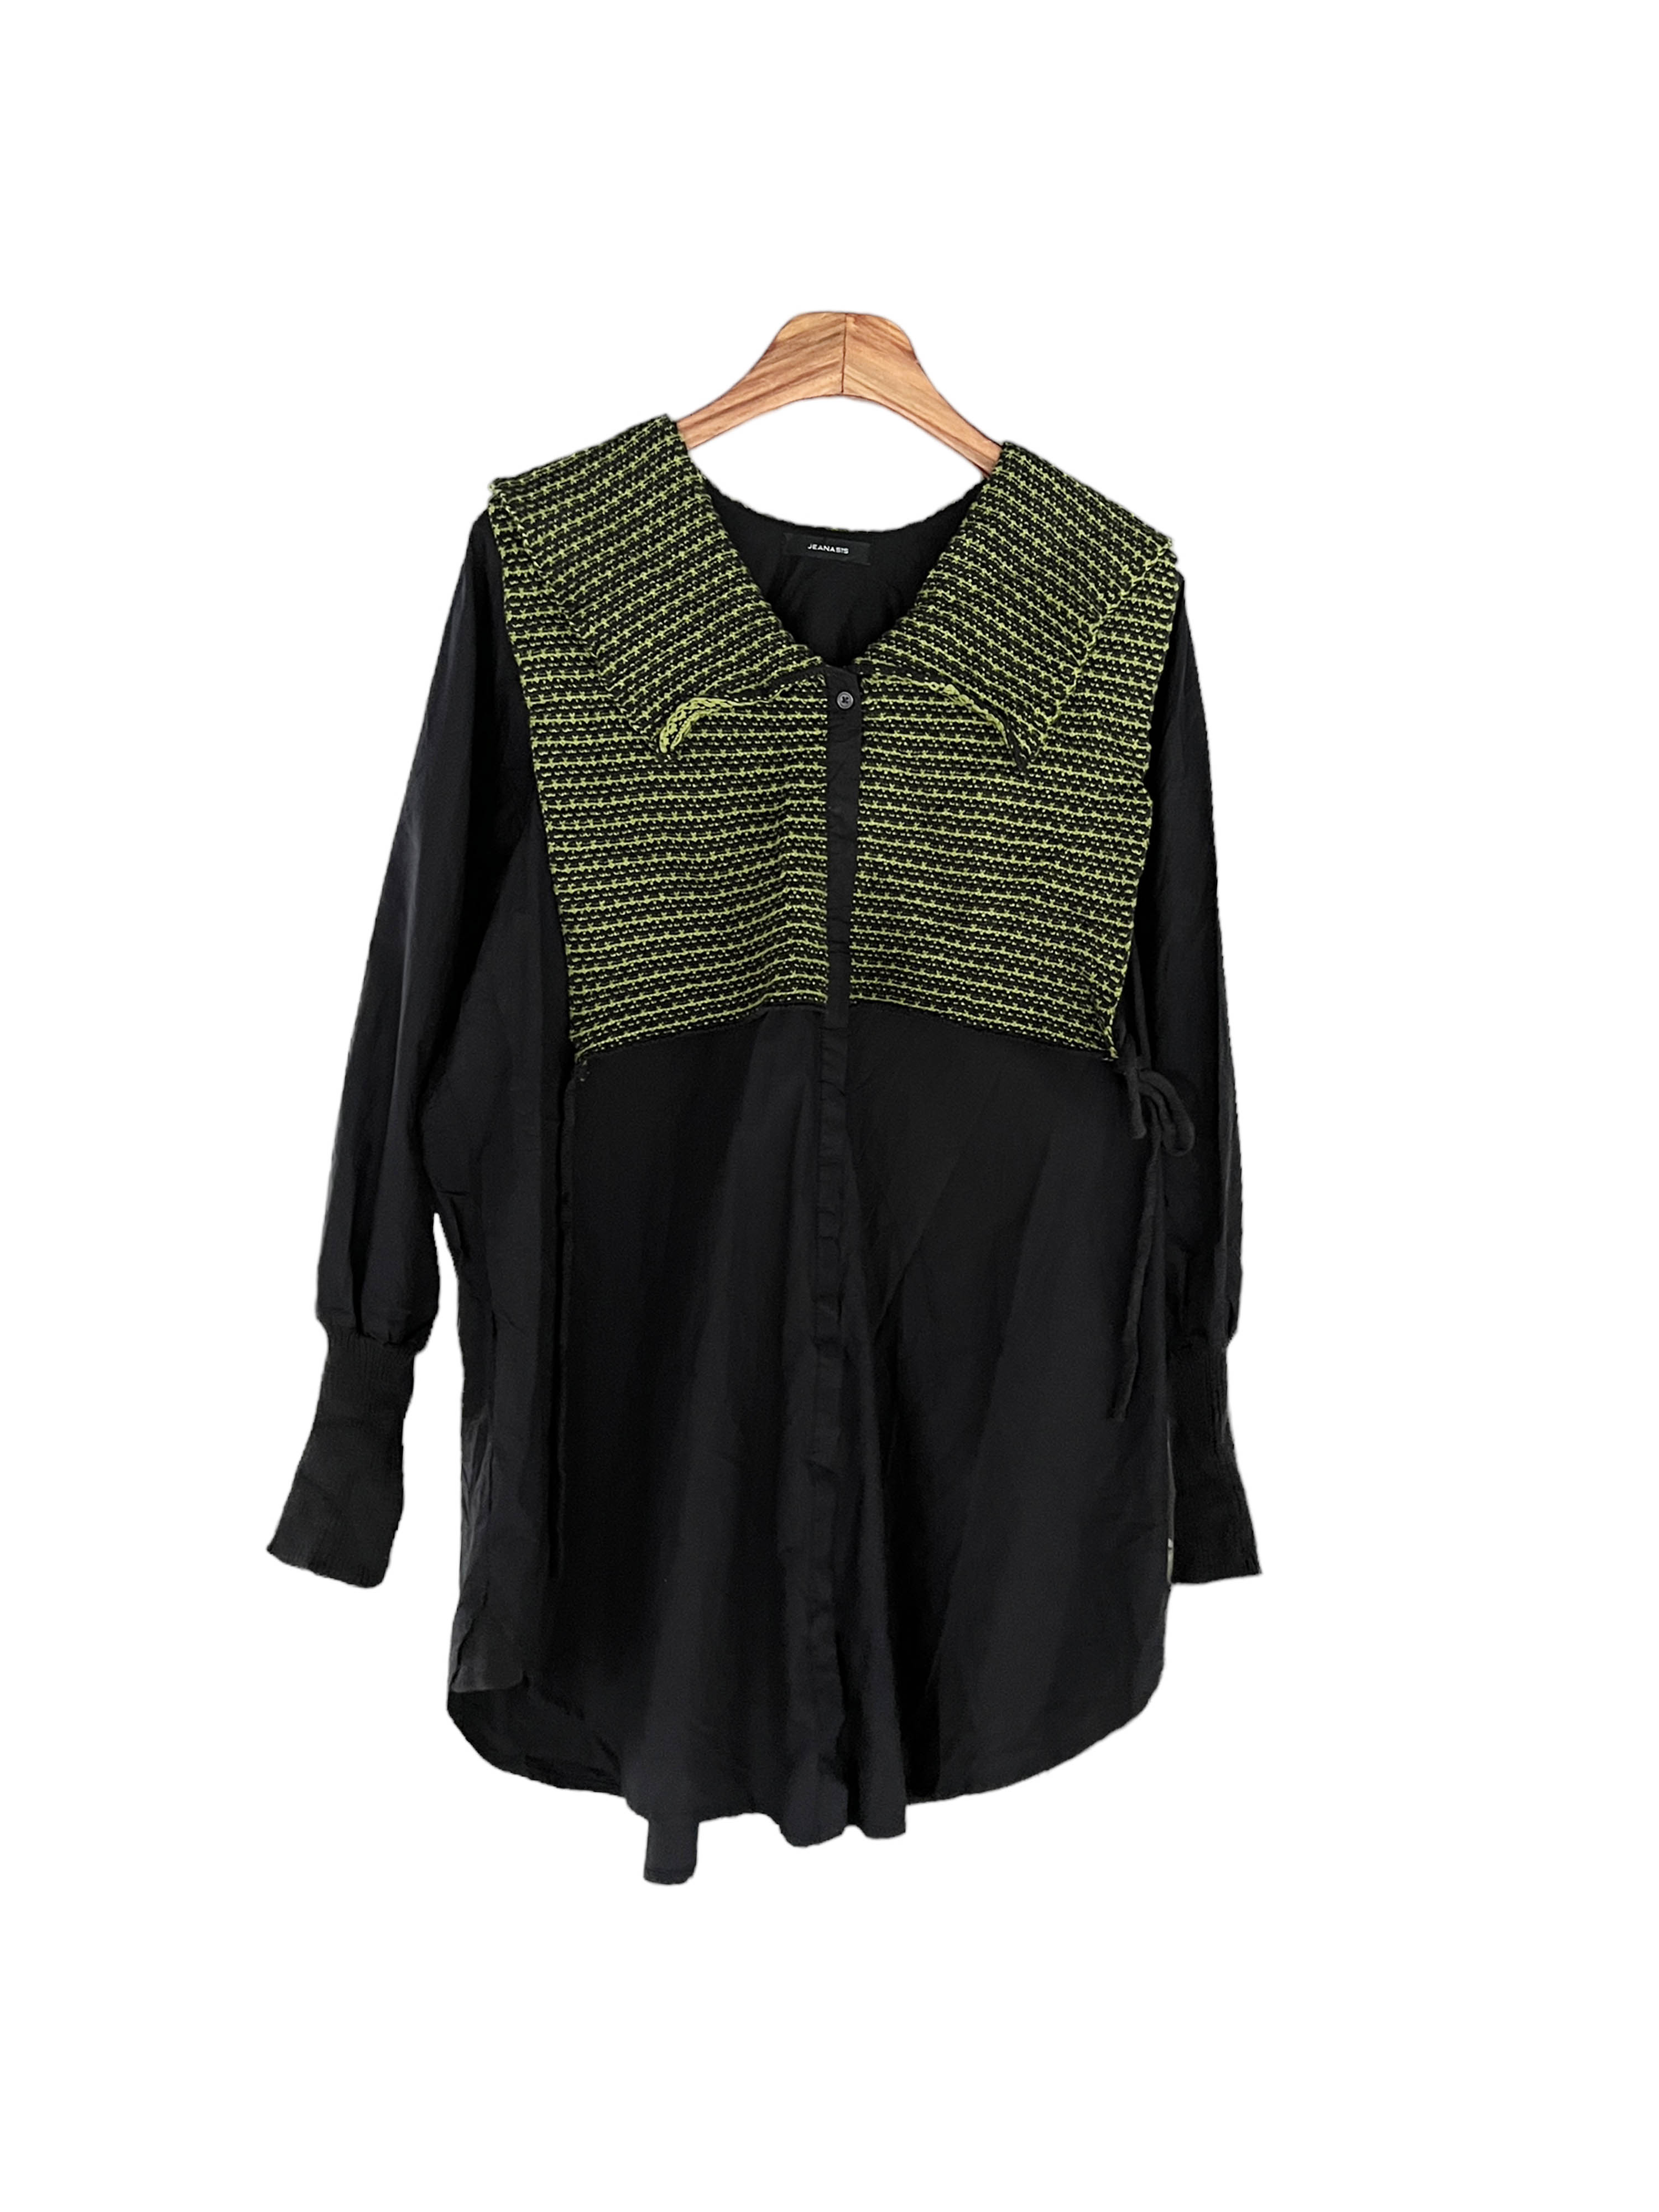 JENESIS knit docking blouse